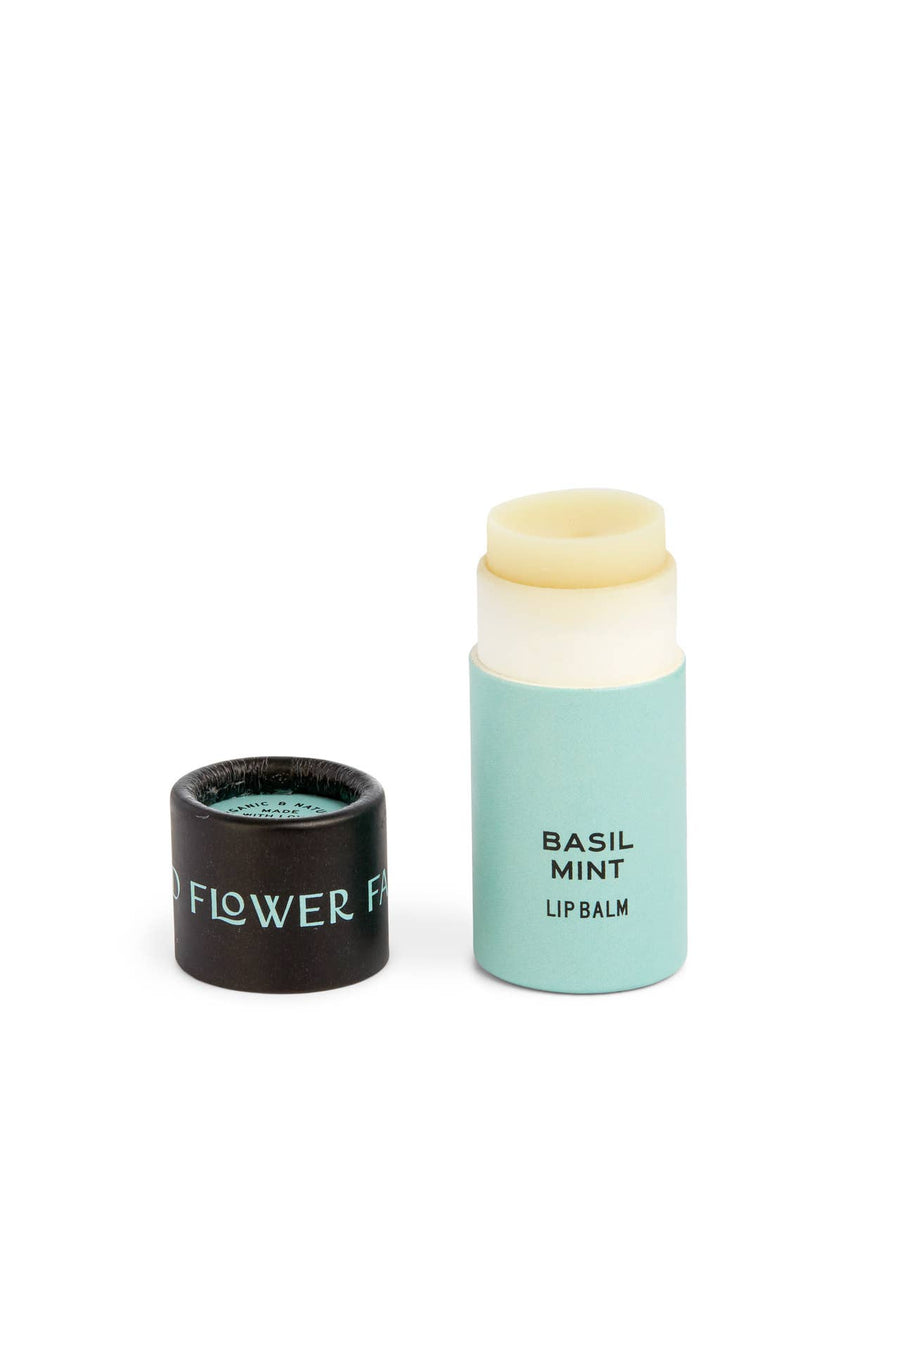 Good Flower Farm - Basil Mint Lip Balm / 0.3 oz Biodegradable Tube